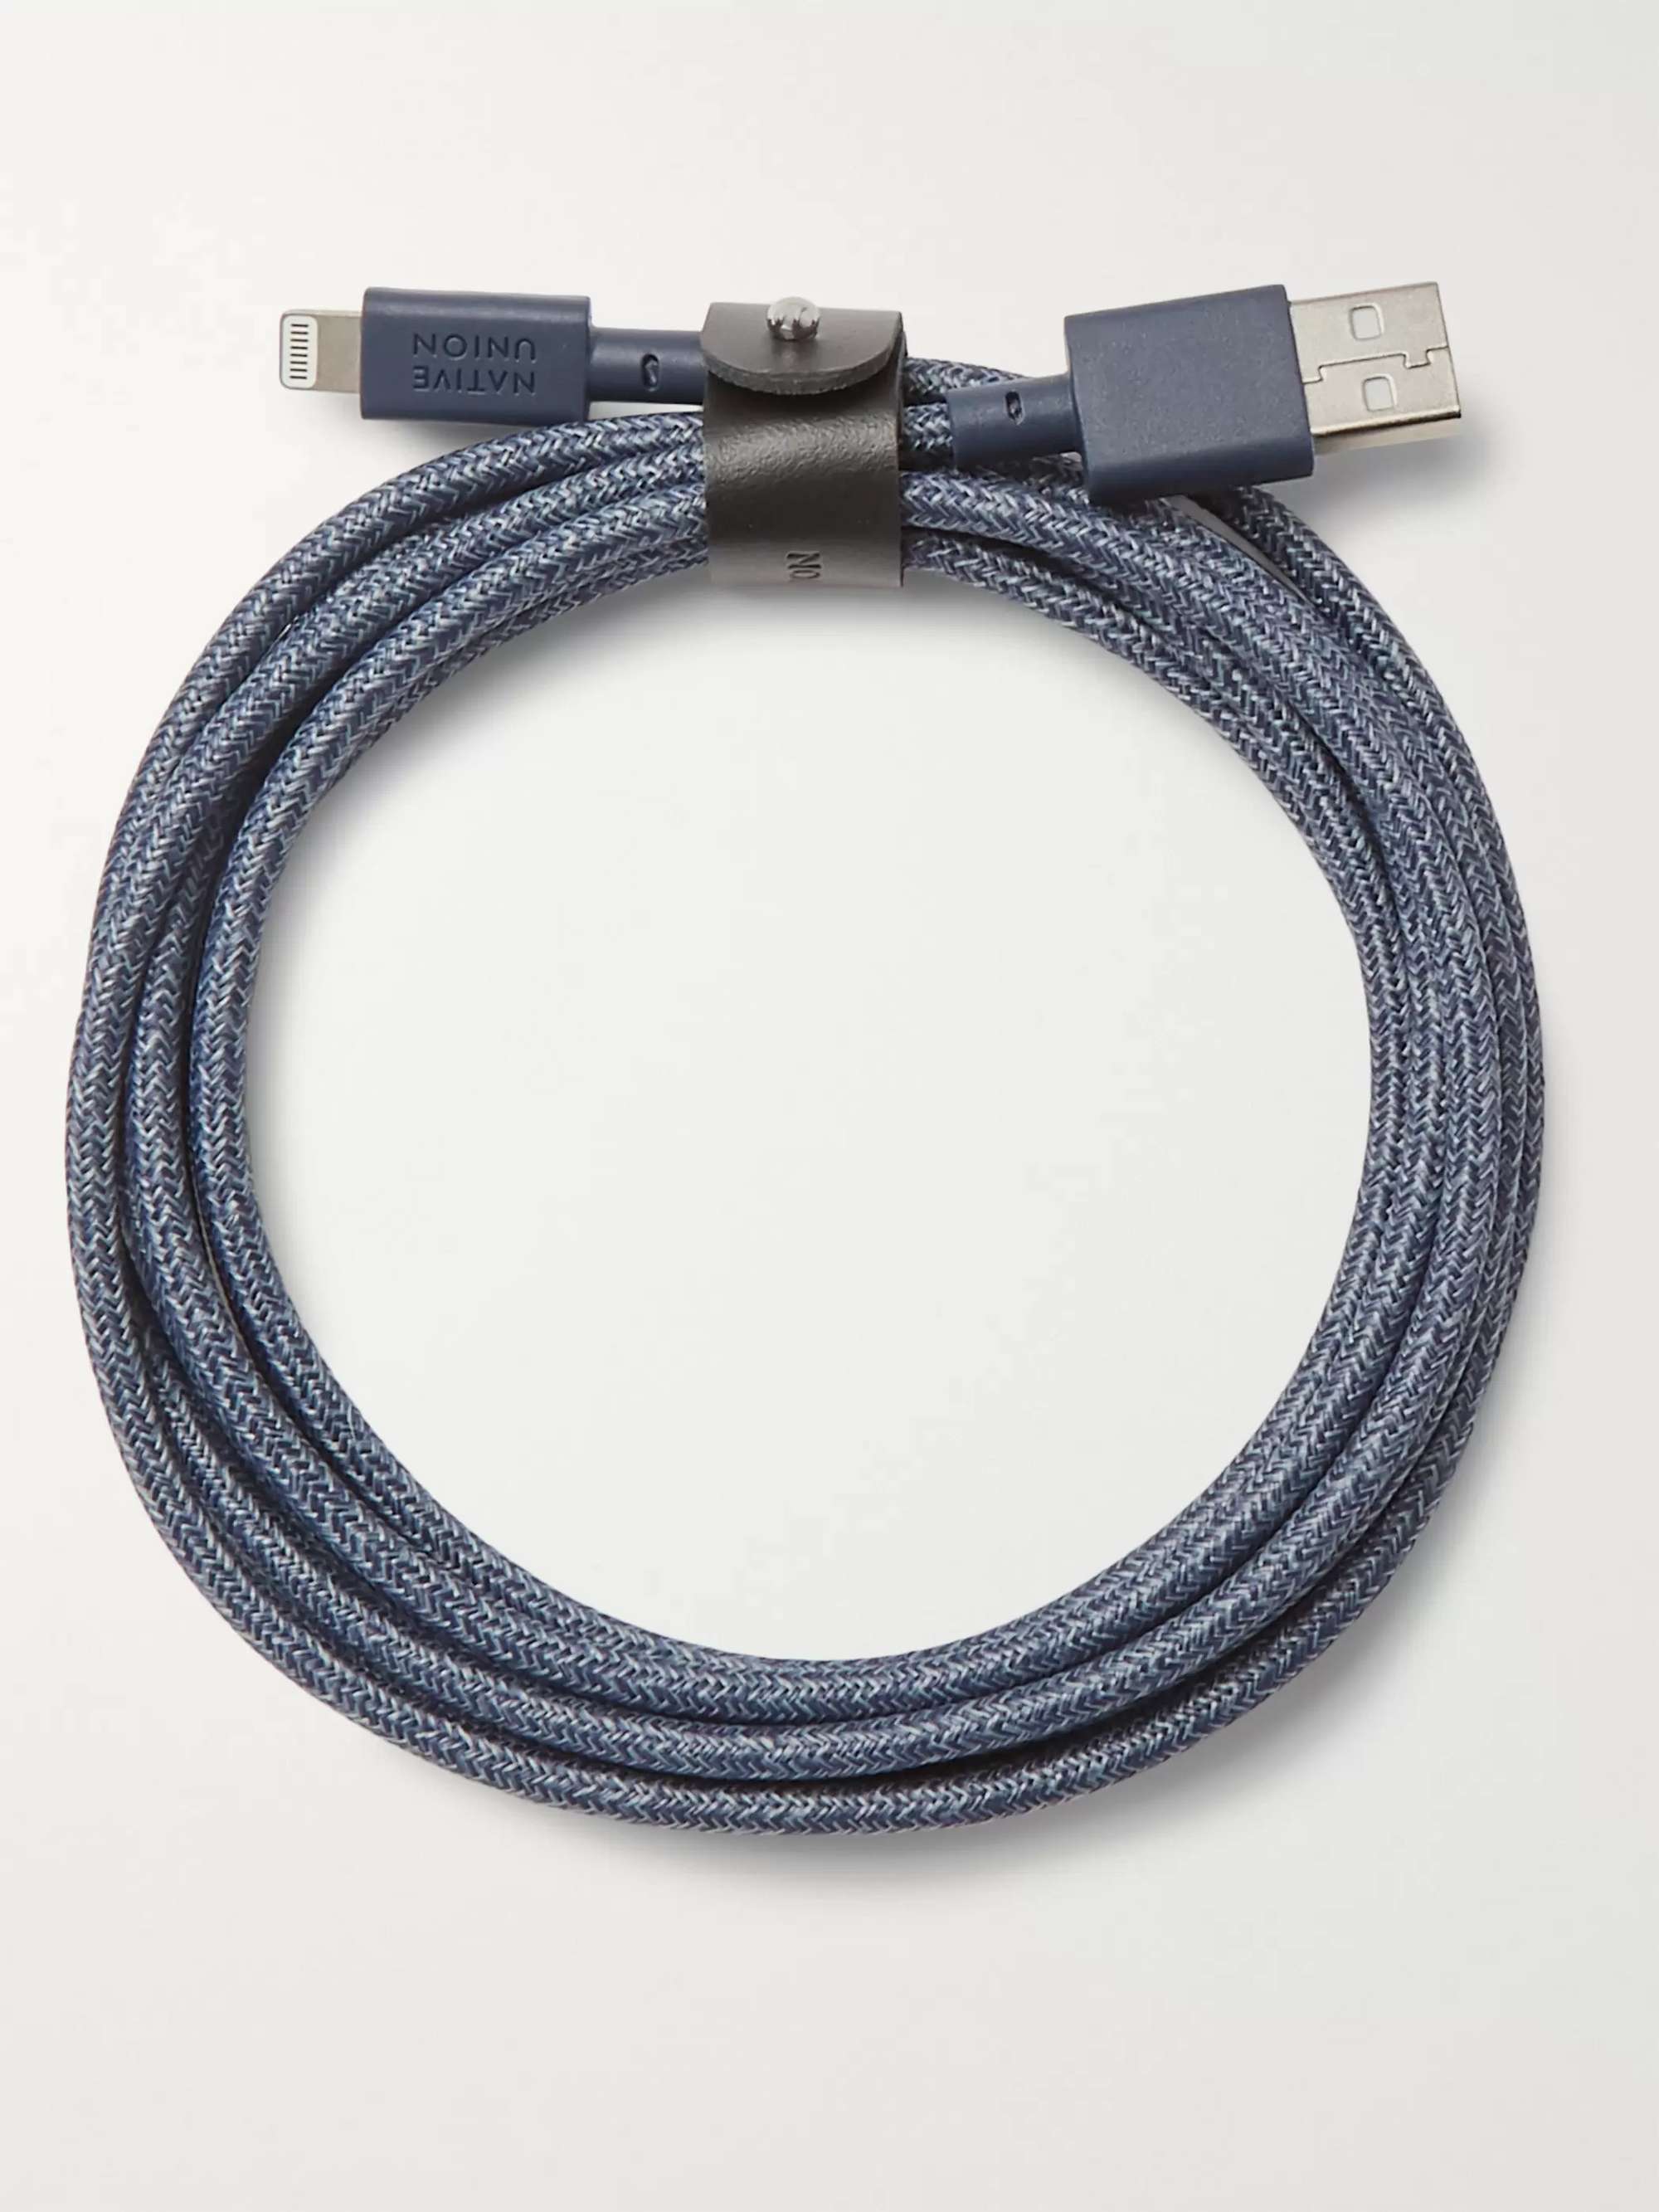 NATIVE UNION XL Belt Lightning Cable